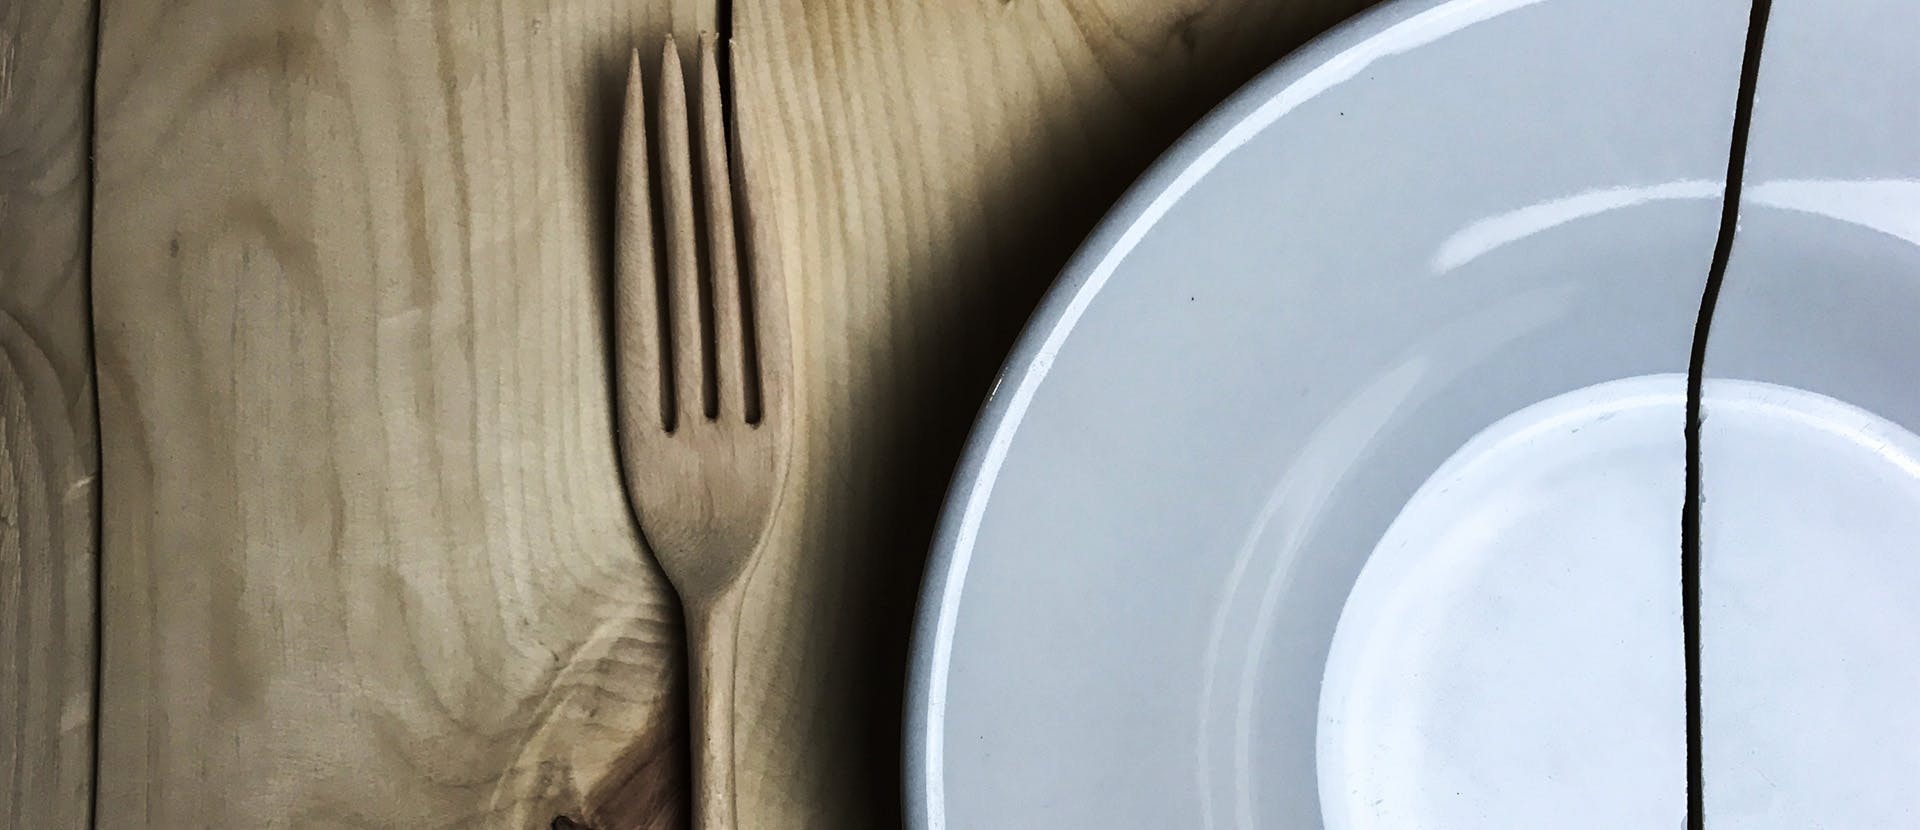 cutlery fork dish food meal